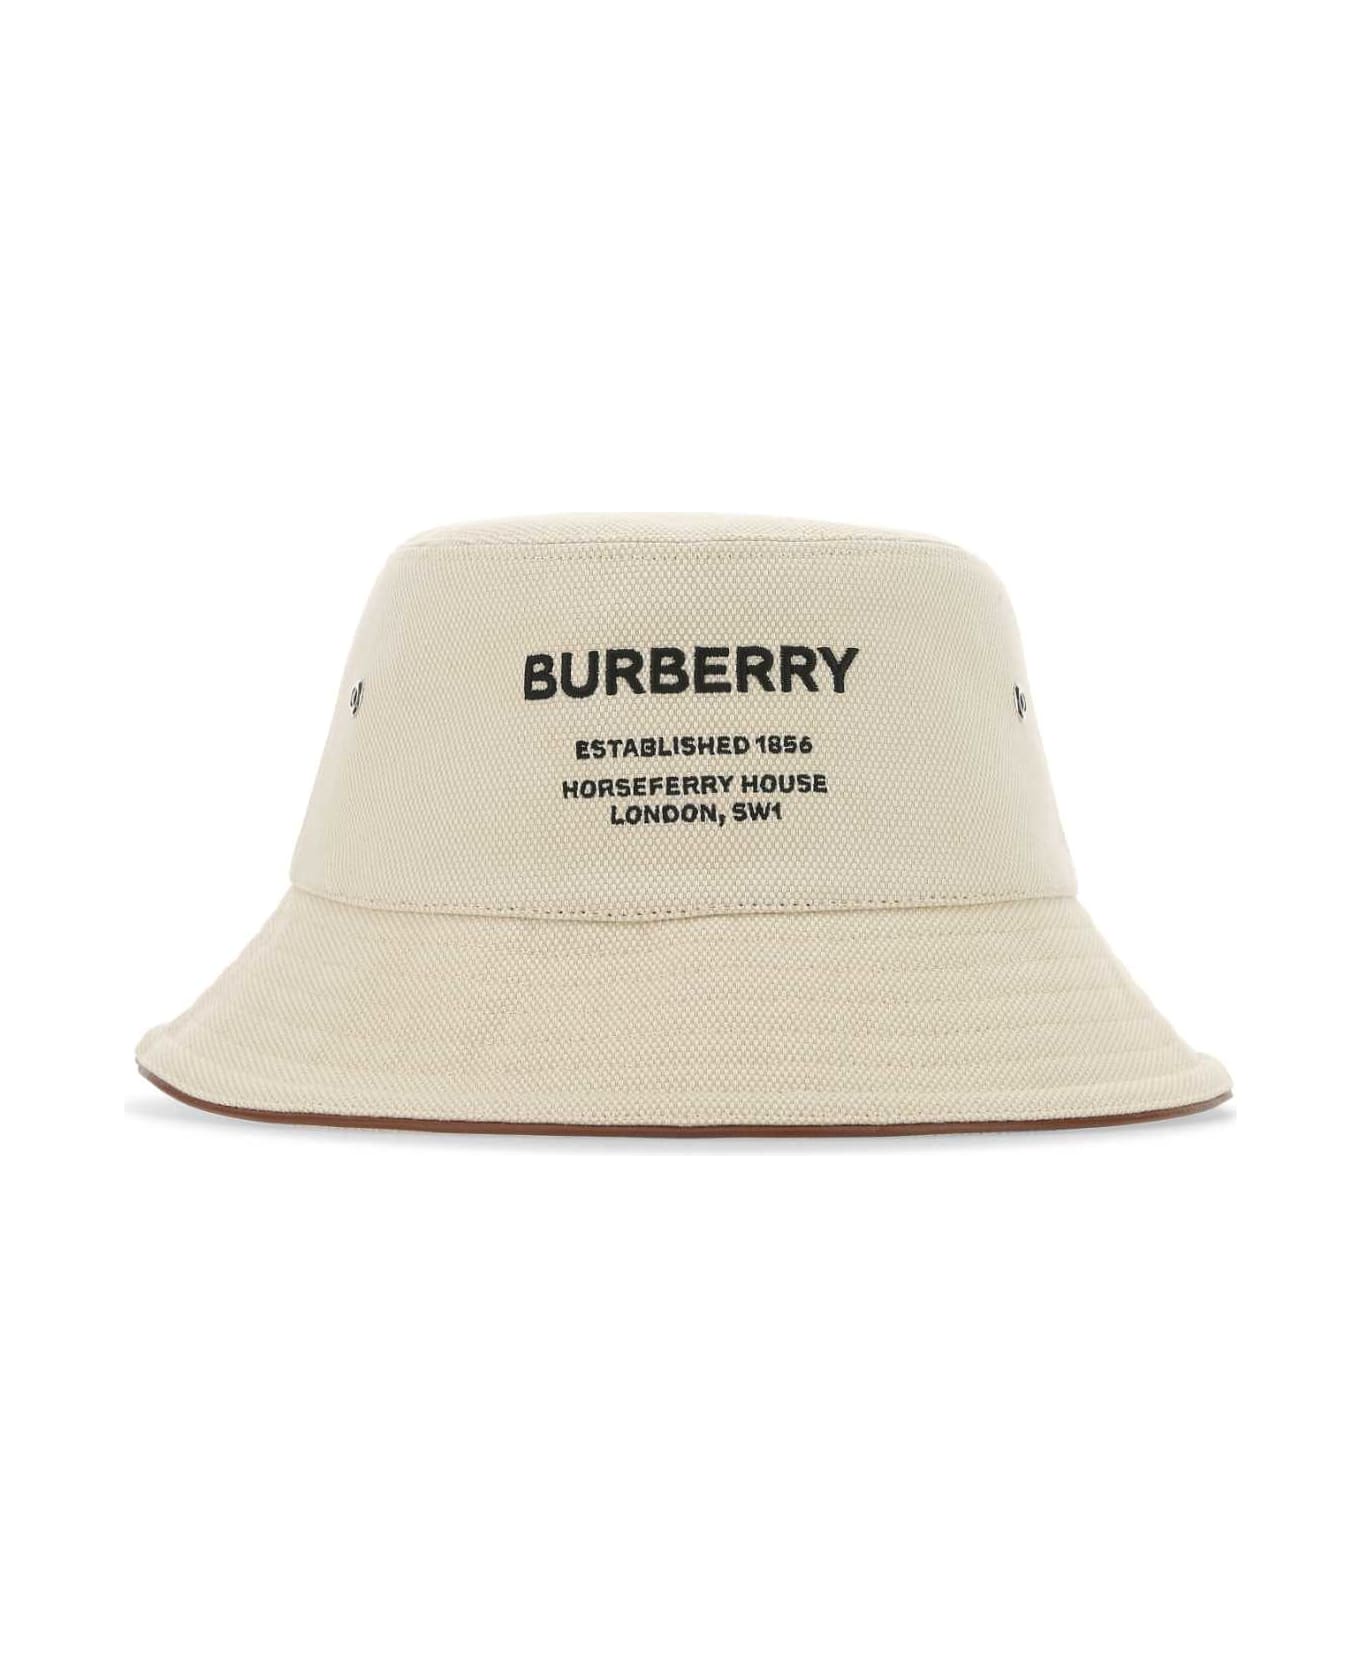 Burberry Sand Cotton Hat - A1395 ヘアアクセサリー